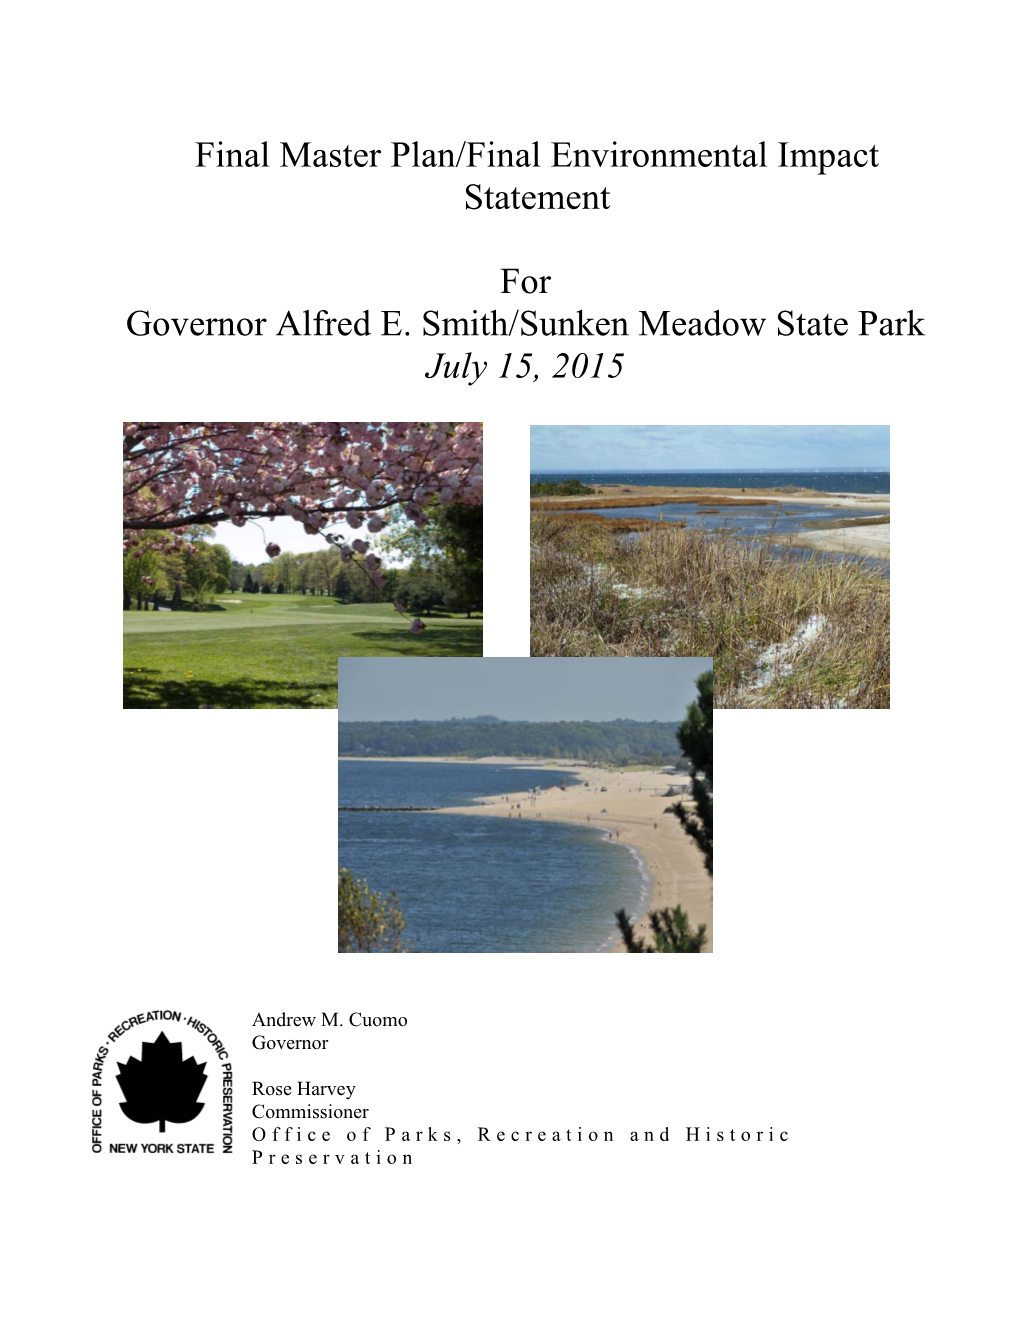 Sunken Meadow State Park Final Master Plan/Environmental Impact